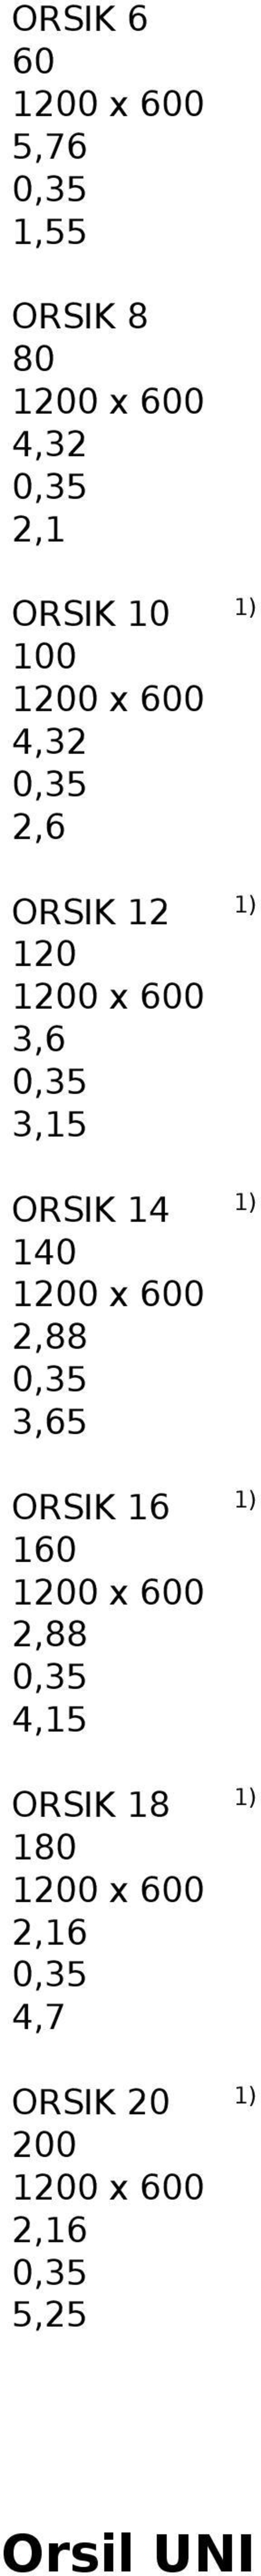 1,88,65 ORSIK 16 1 1,88 4,15 ORSIK 18